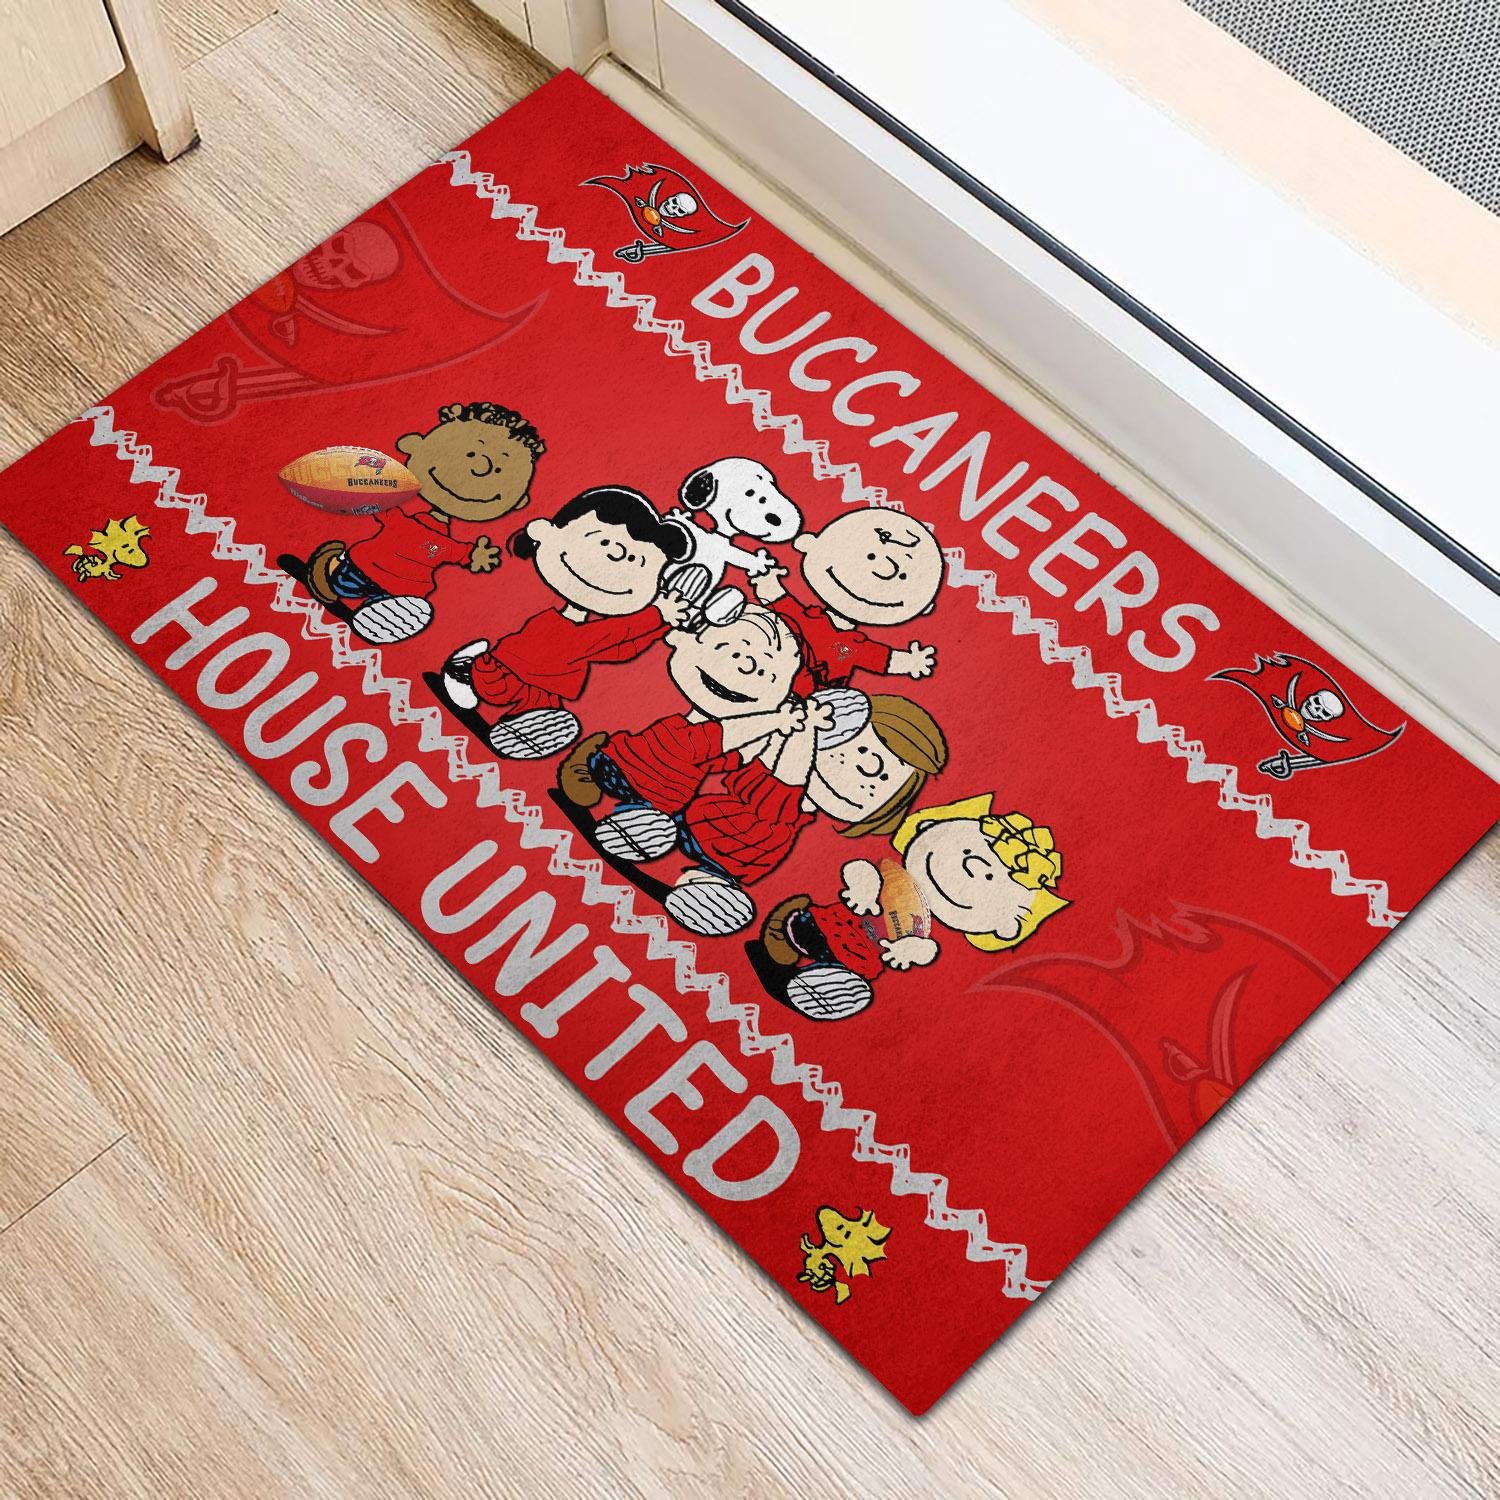 Tampa Bay Buccaneers Peanuts House United Doormat